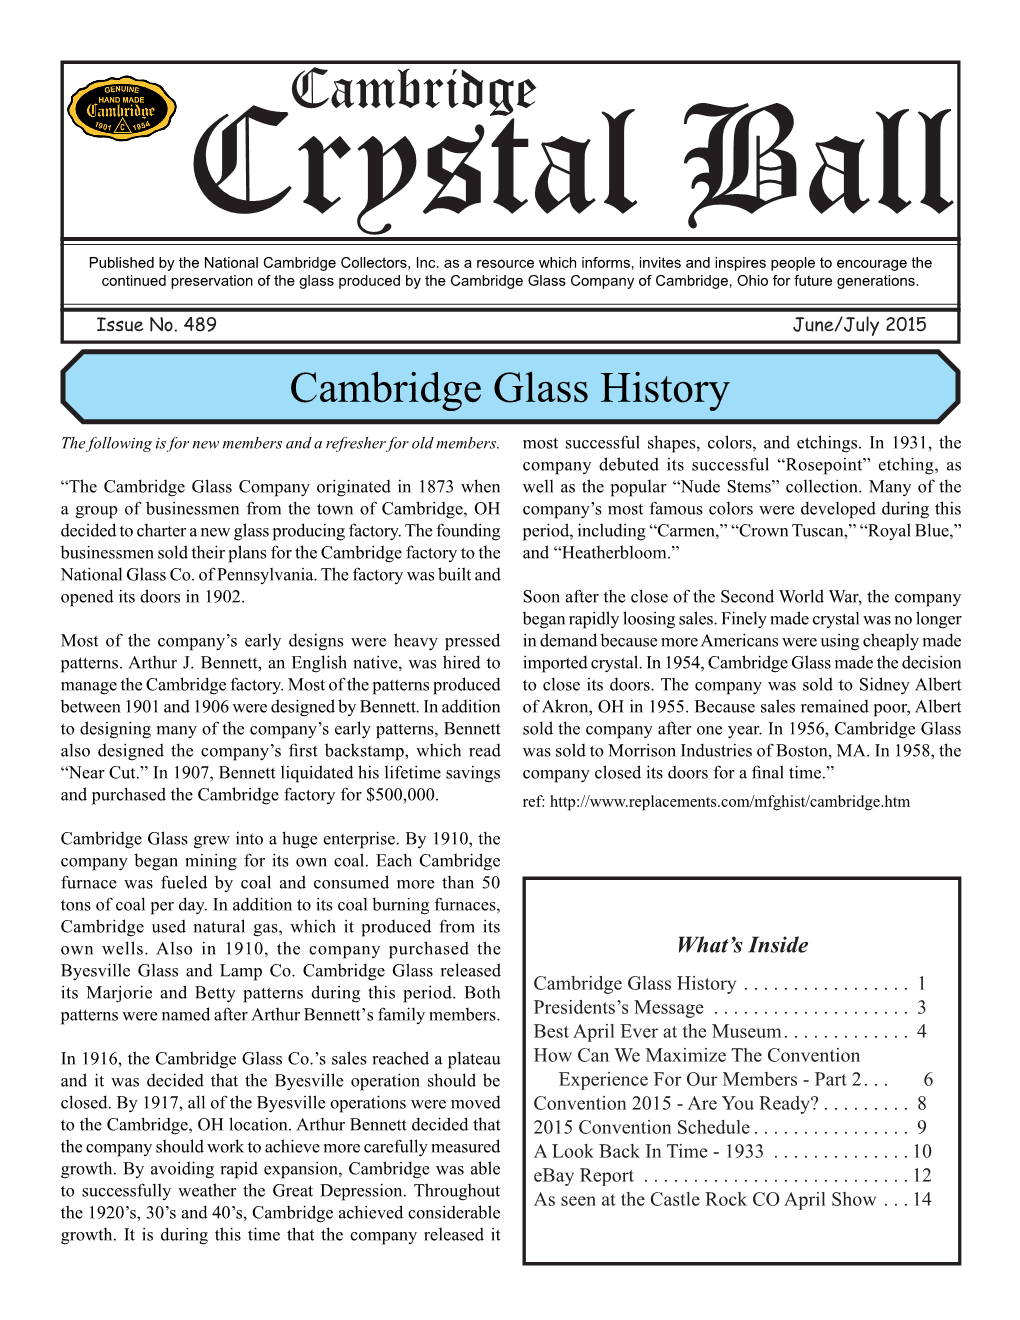 June/July 2015 Cambridge Glass History